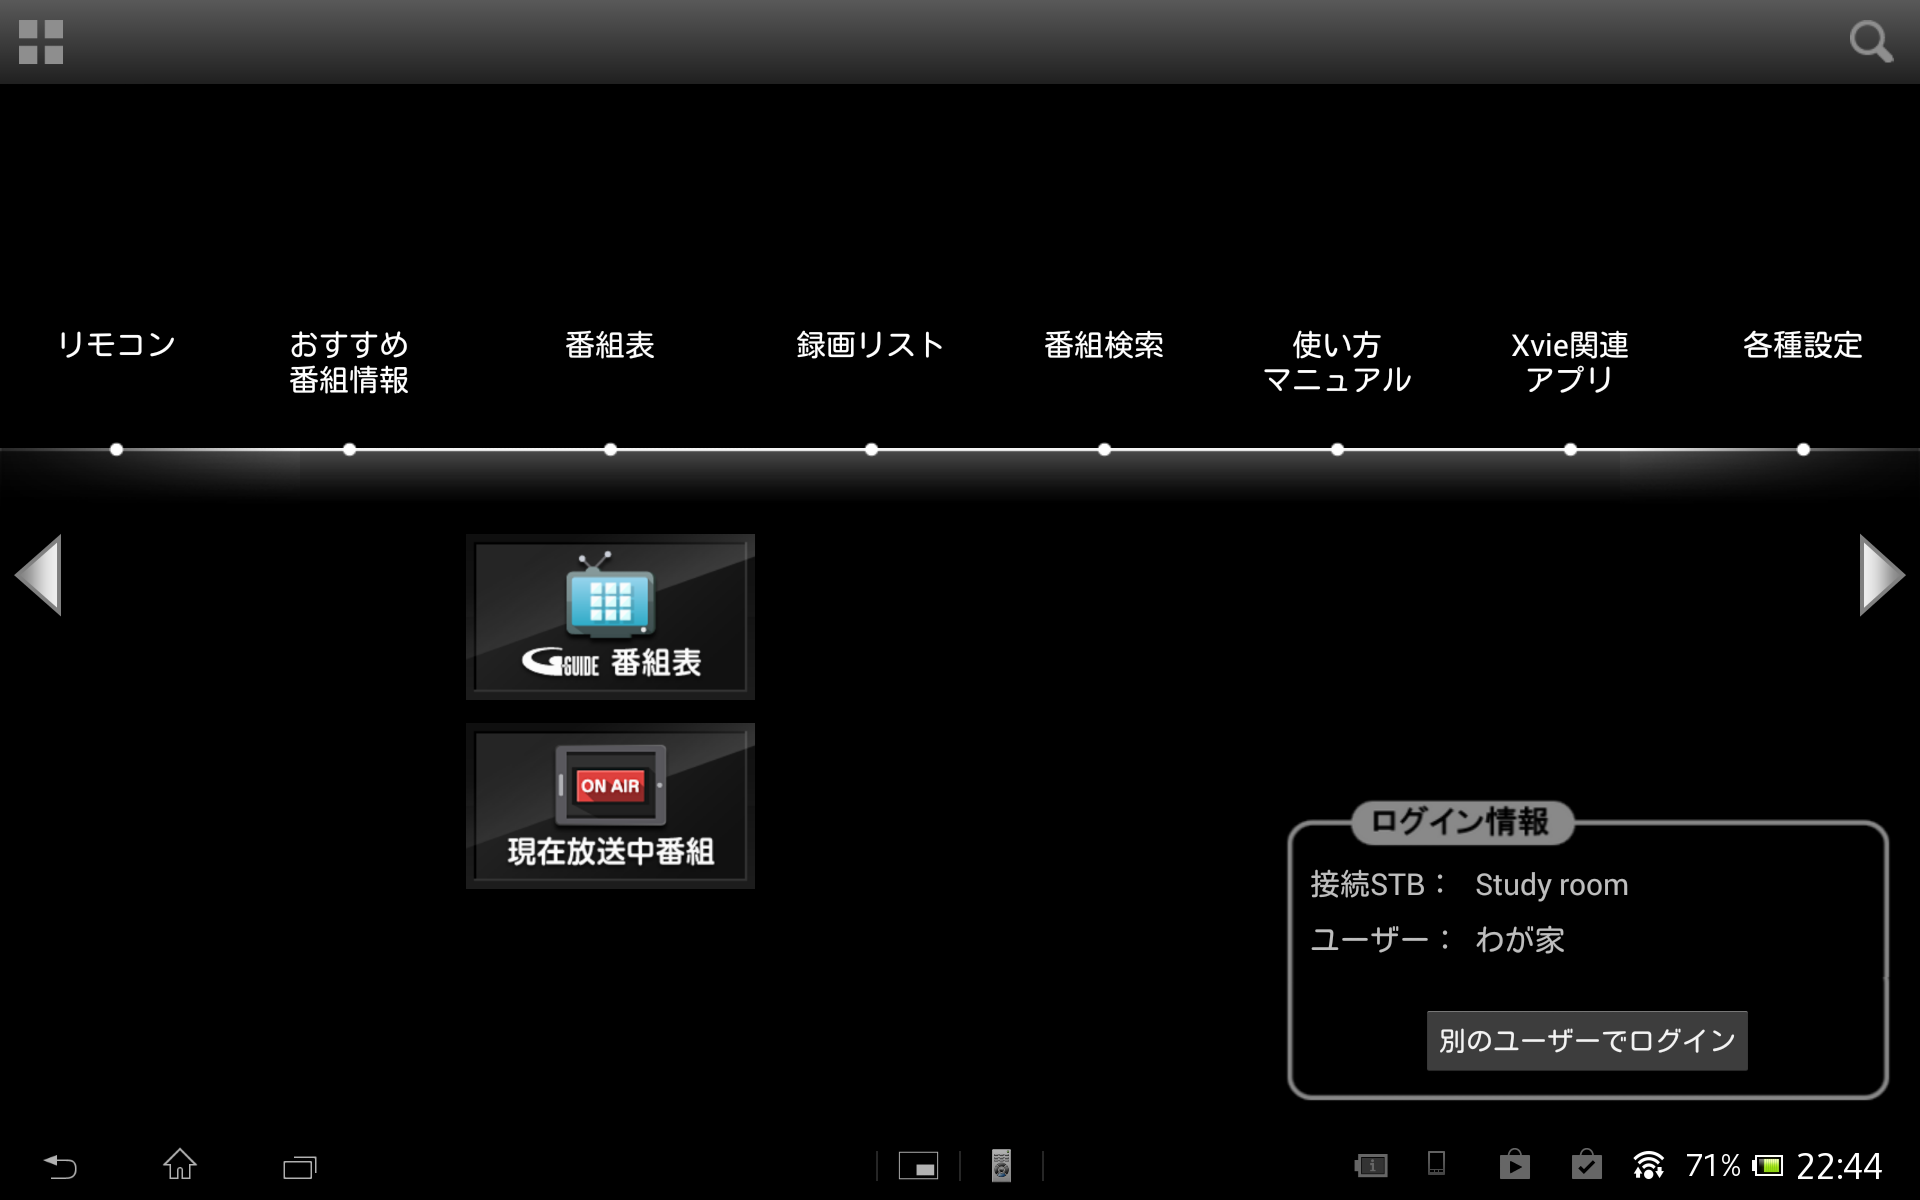 Android application J:COM Box screenshort